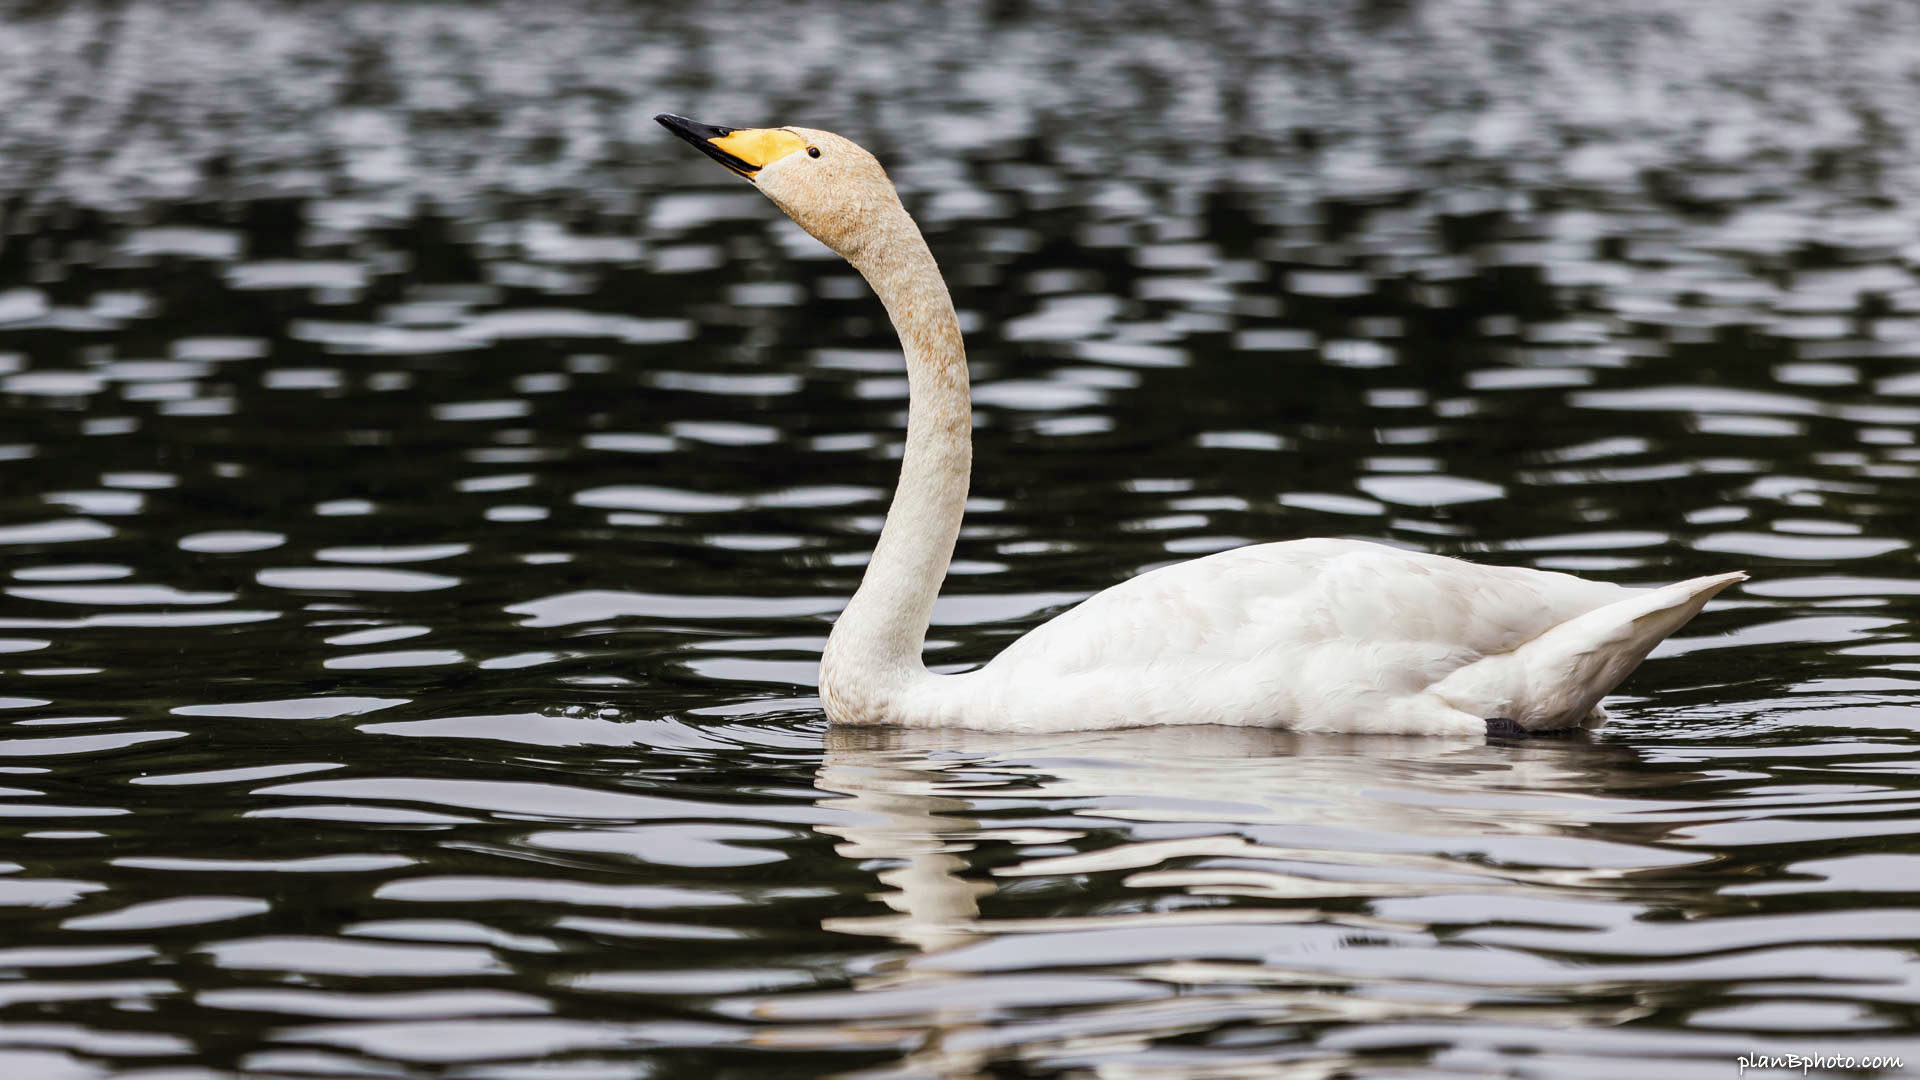 Whooper swan - white swan with yellow and black beak near London